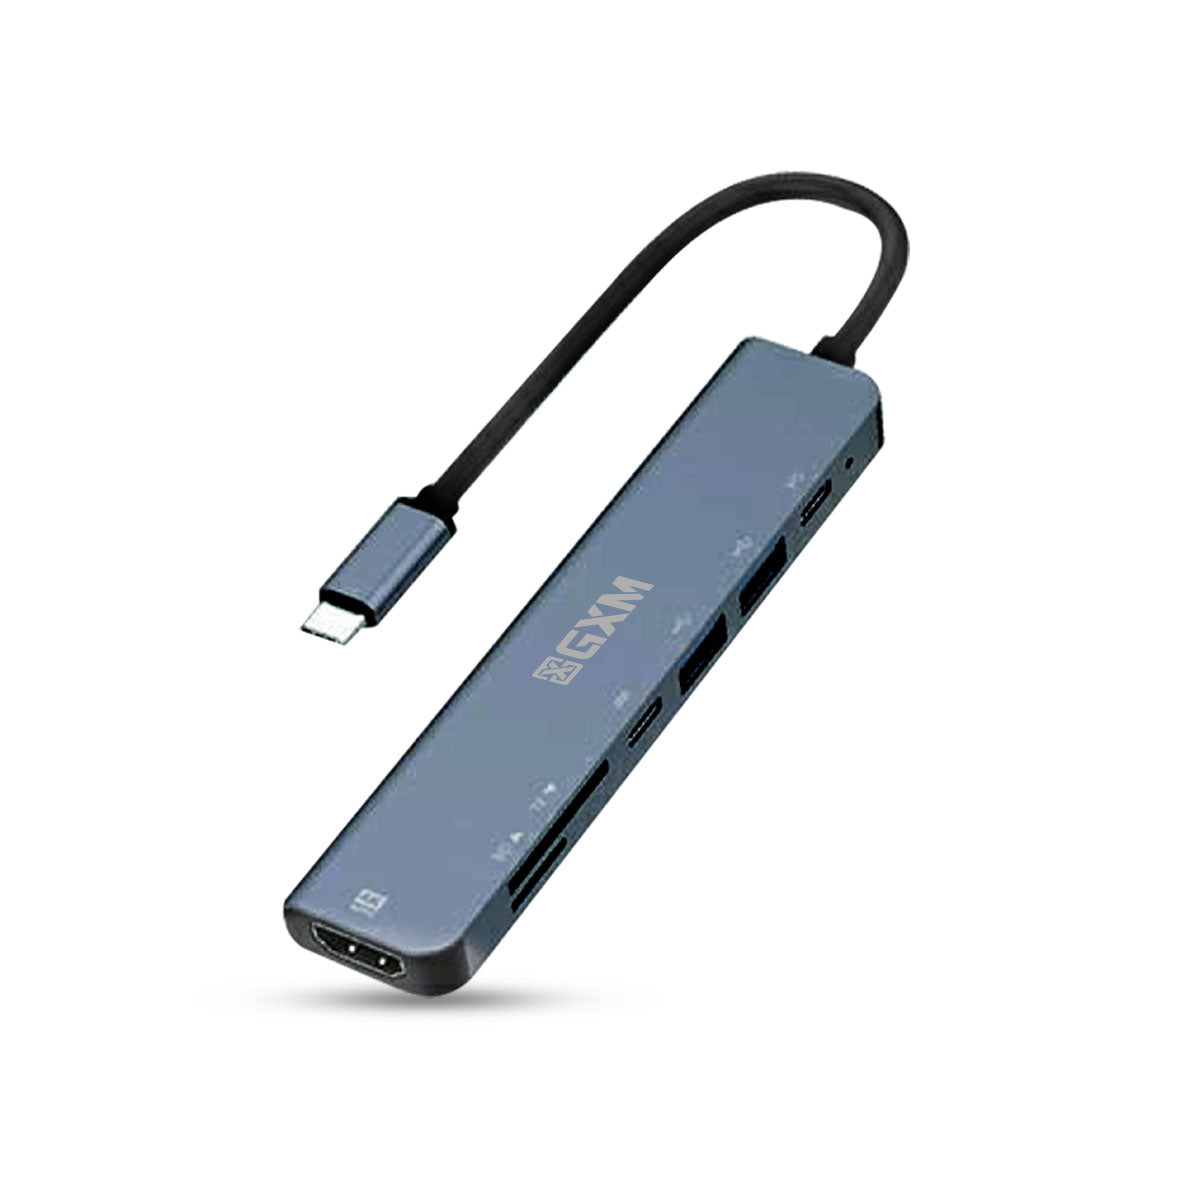 GXM 7 IN 1 USB-C Docking Station Hub HDMI PD Charging Type-C Hub 2x 1x SD TF Card Slot Laptop Mobile Phone UC902